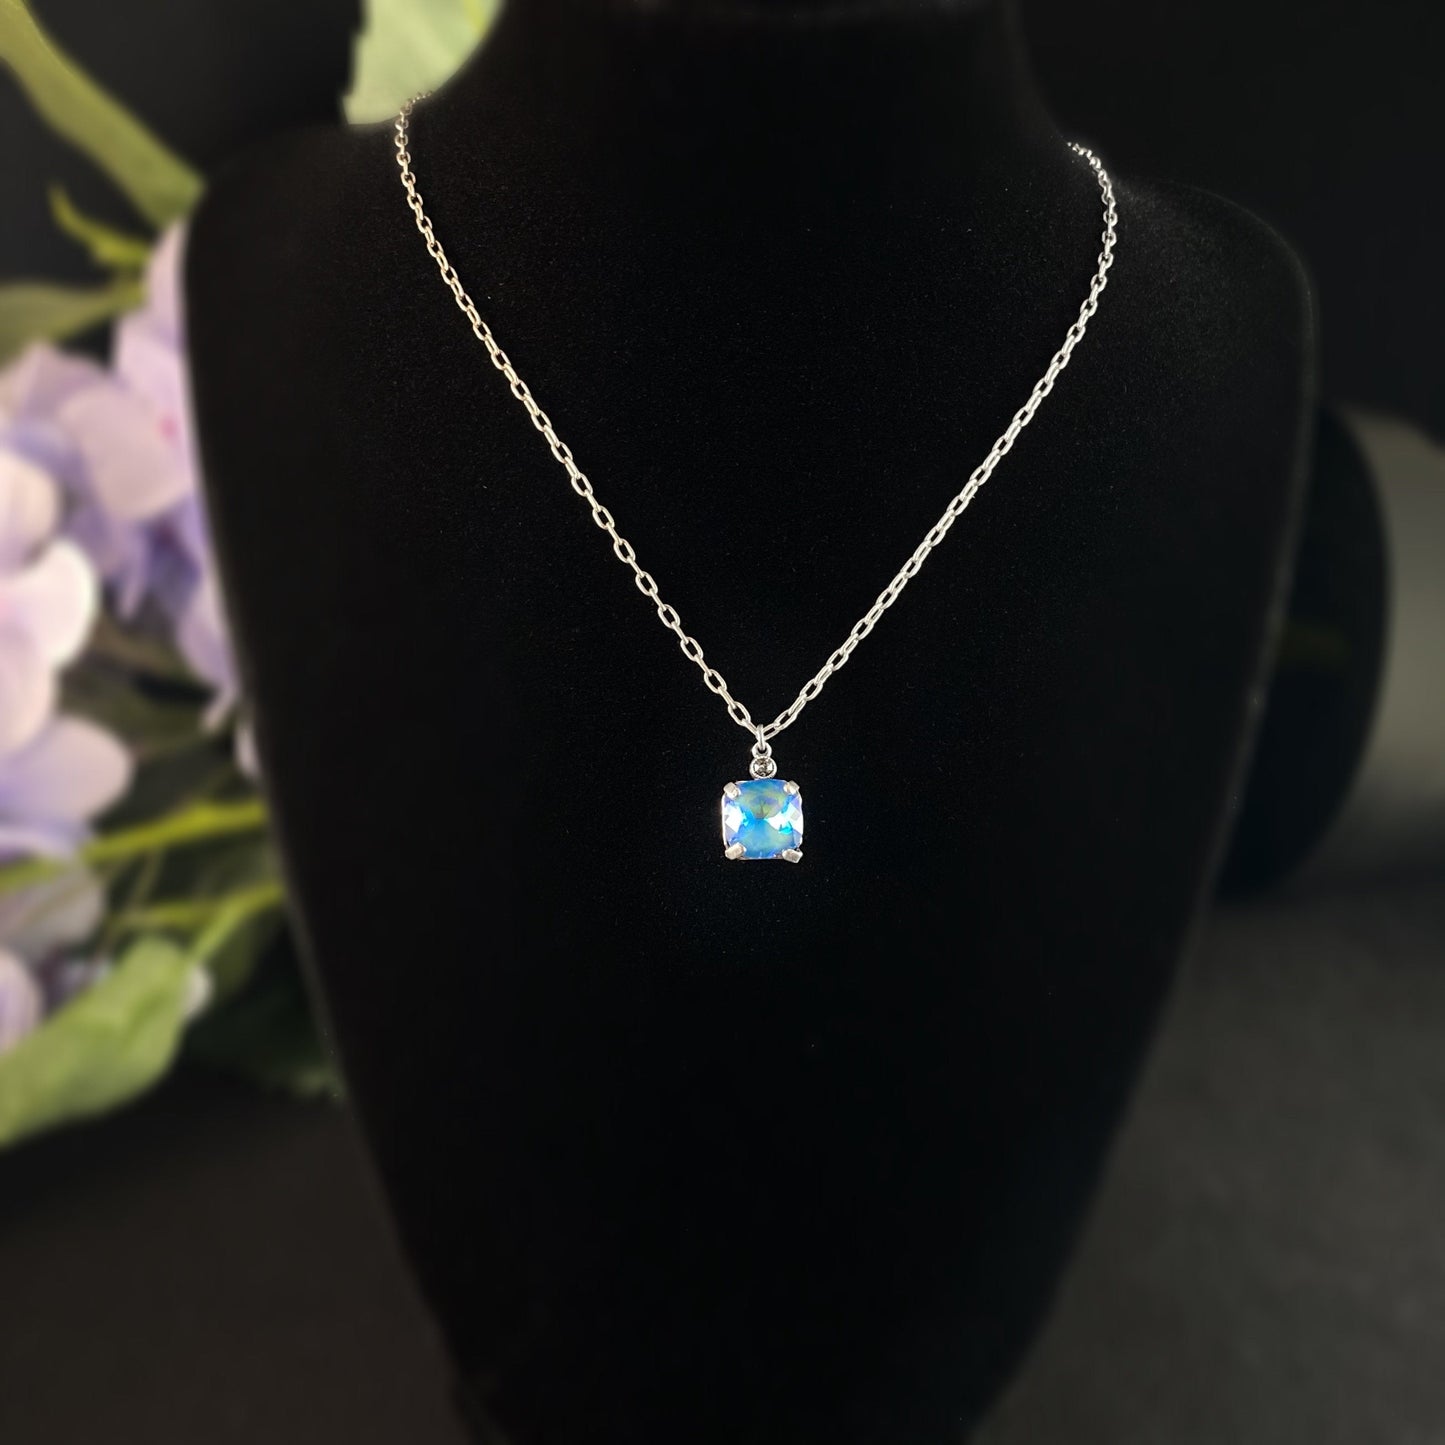 Blue Square Cut Swarovski Crystal Pendant Necklace - La Vie Parisienne by Catherine Popesco